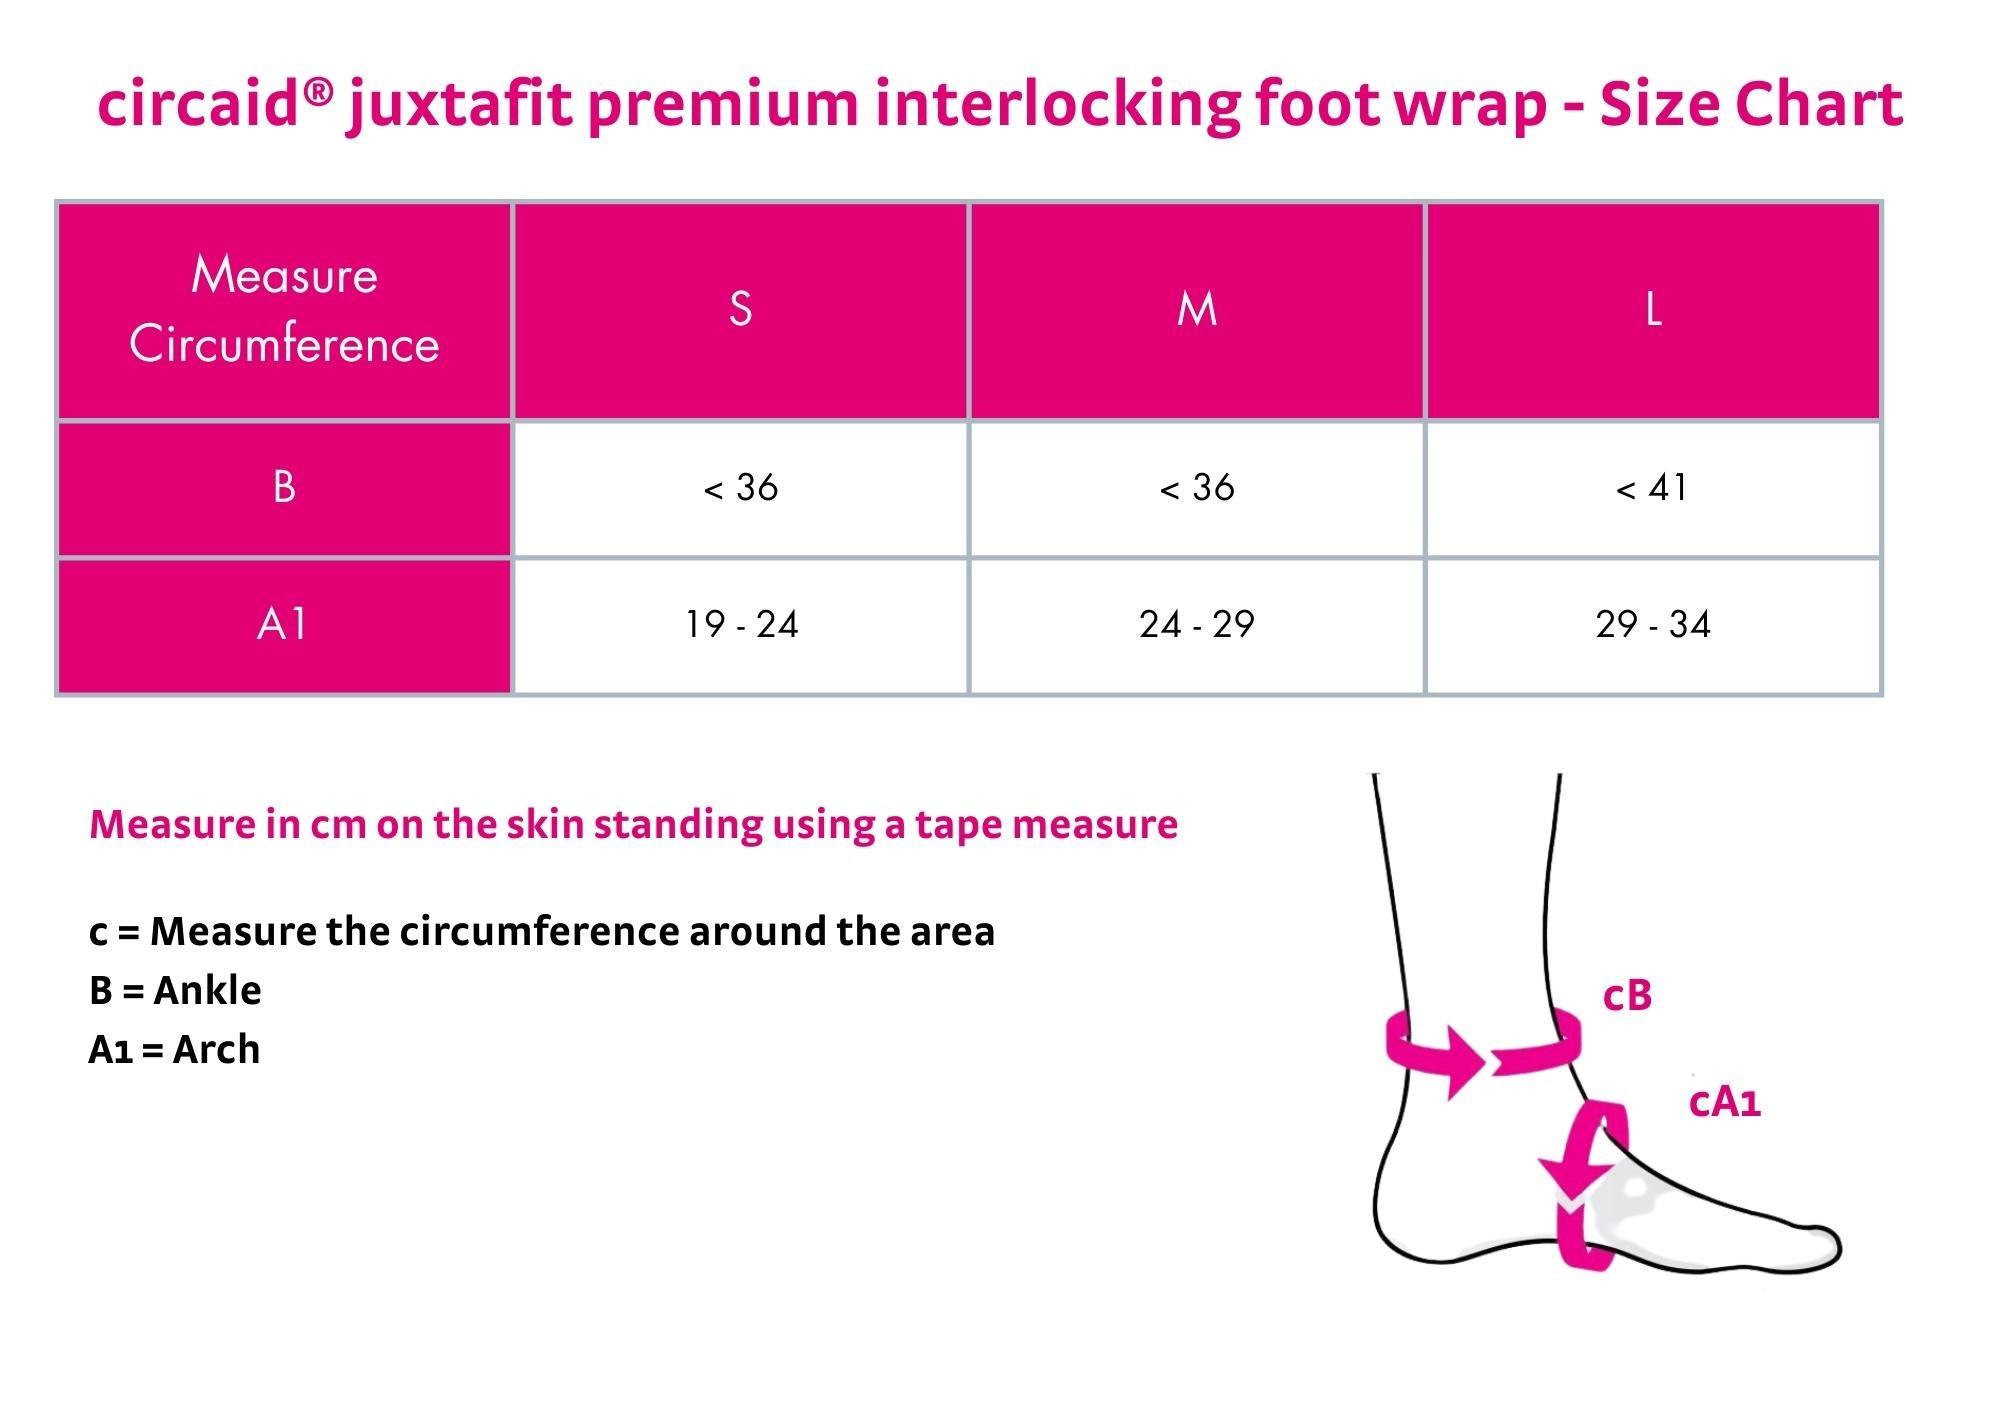 circaid® juxtafit Premium Interlocking Ankle Foot Wrap